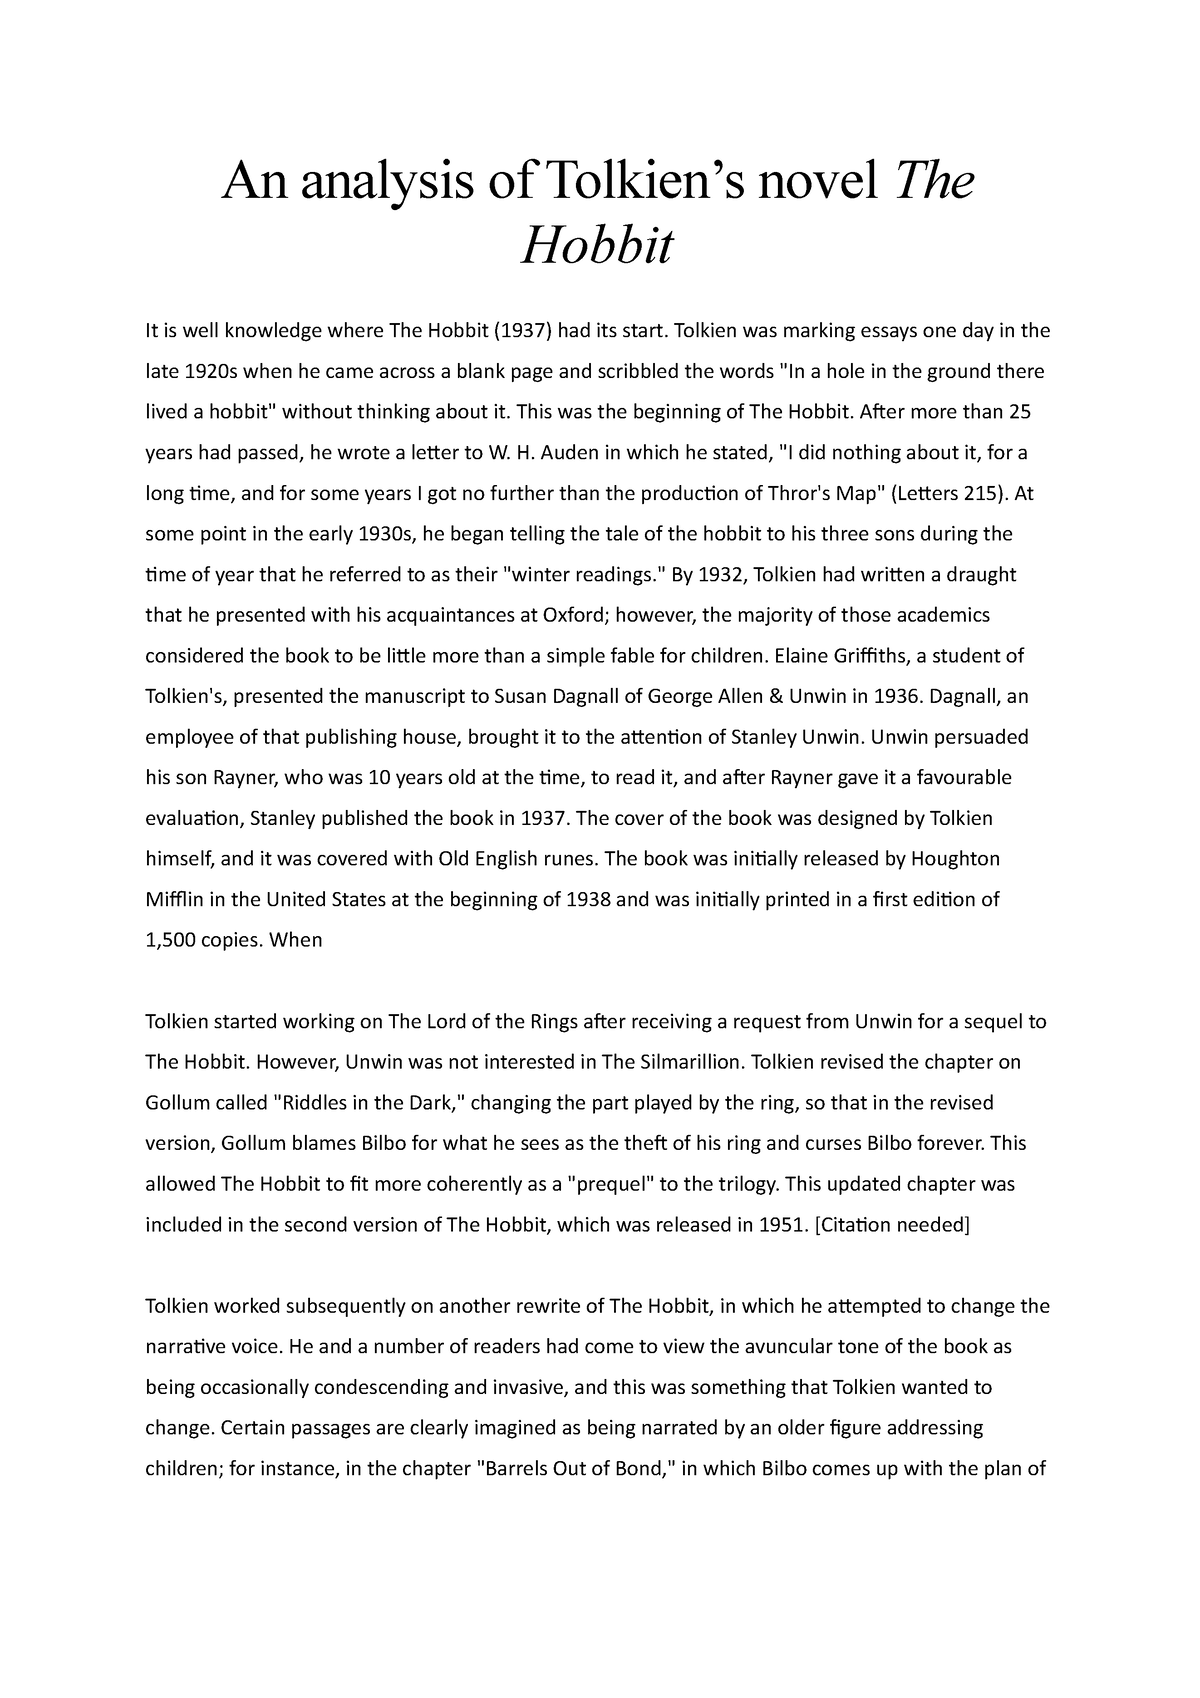 the hobbit analysis essay